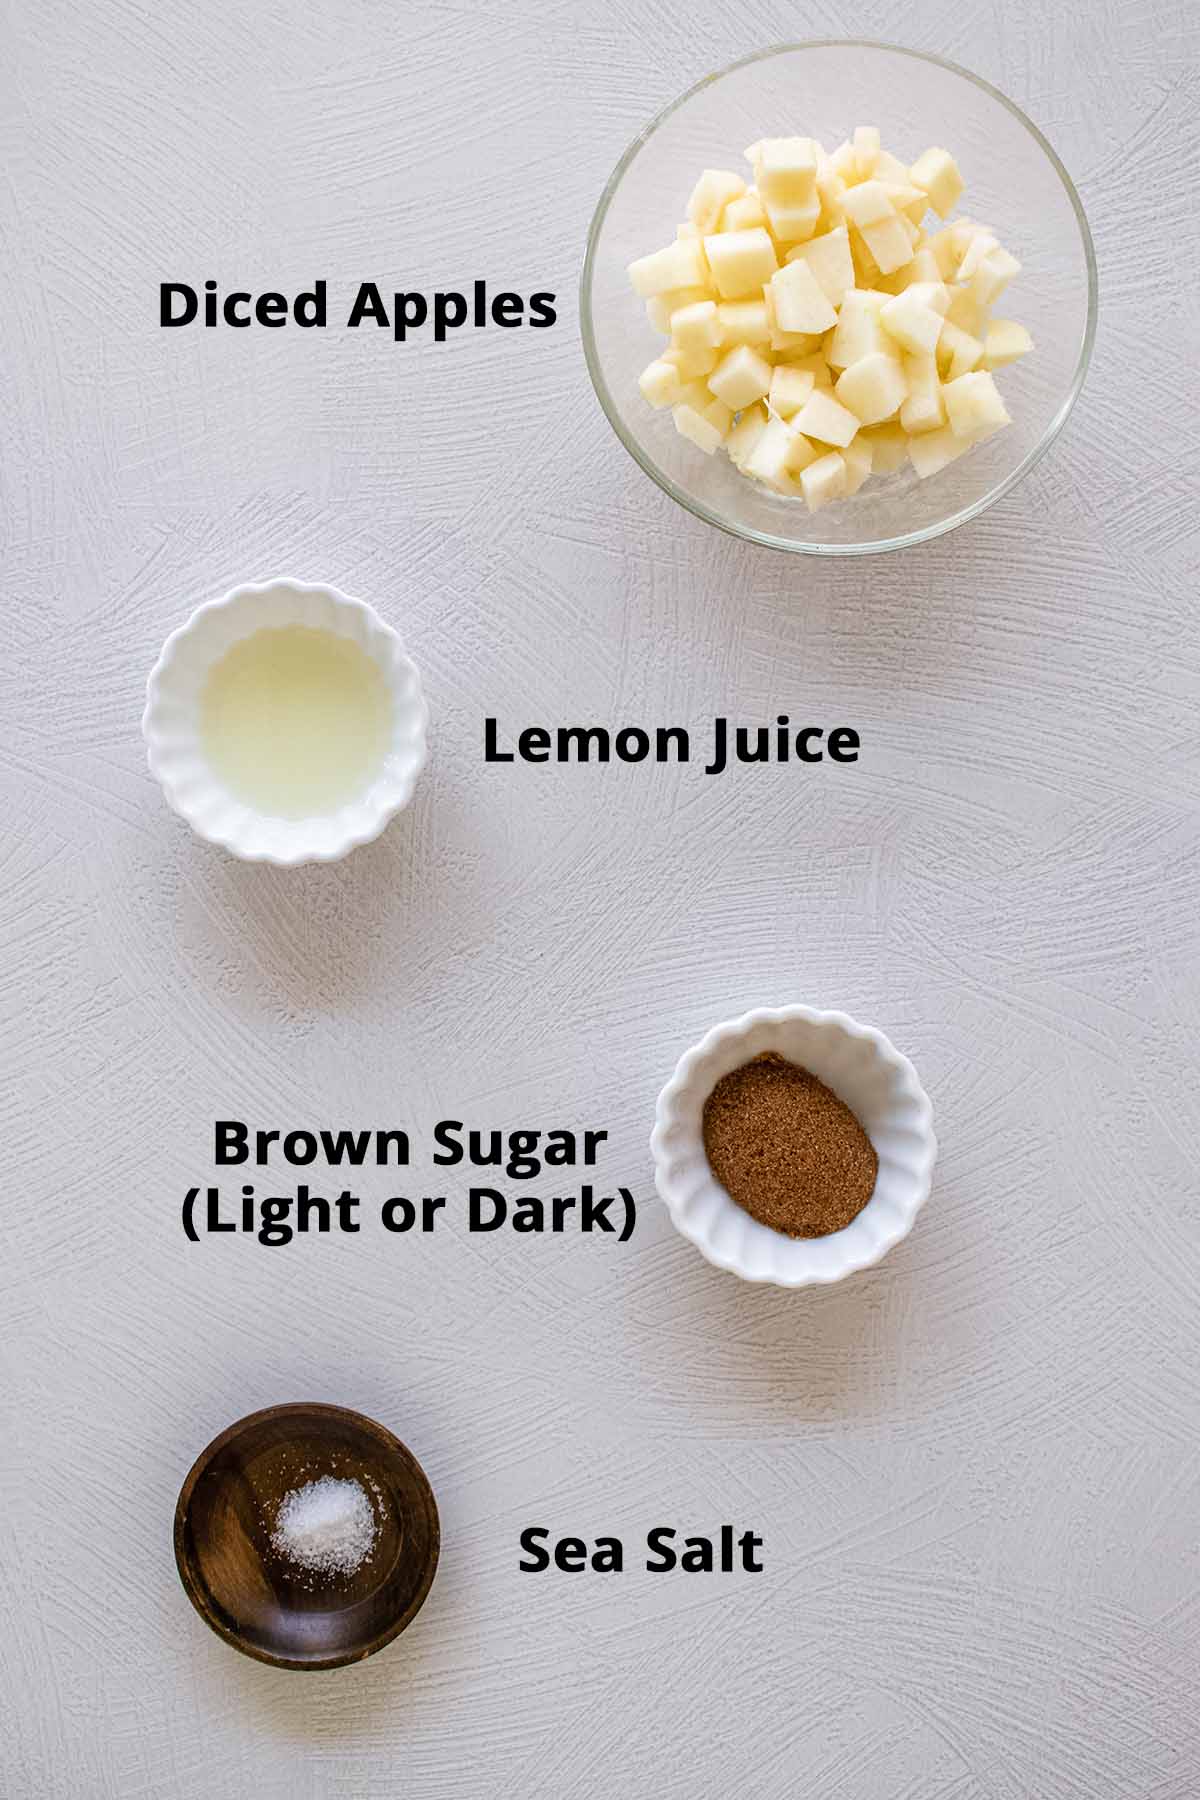 Apple compote ingredients